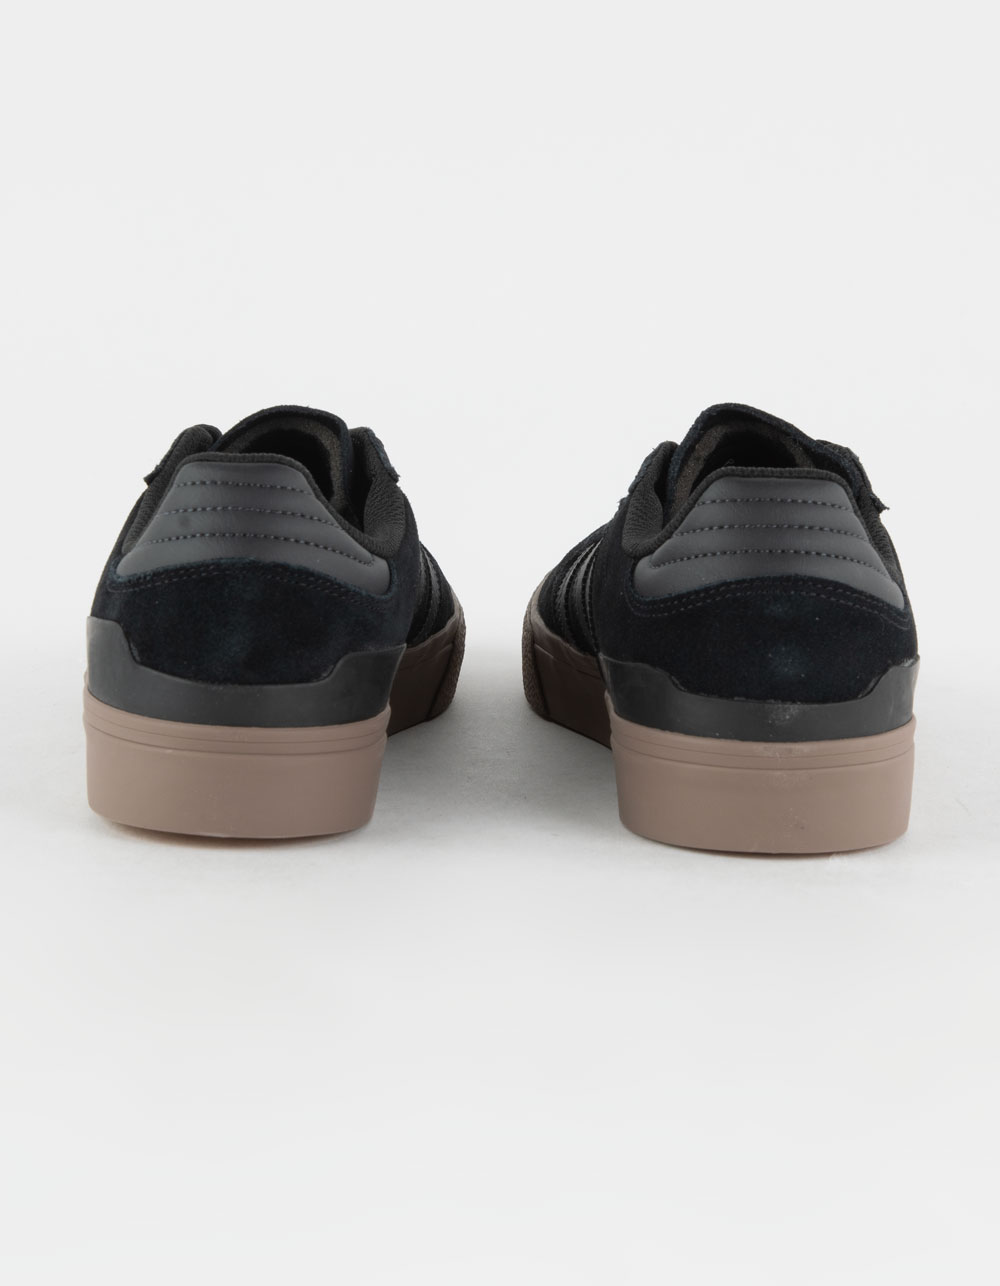 ADIDAS Busenitz Vulc II Mens Shoes - BLK/DK GRY | Tillys